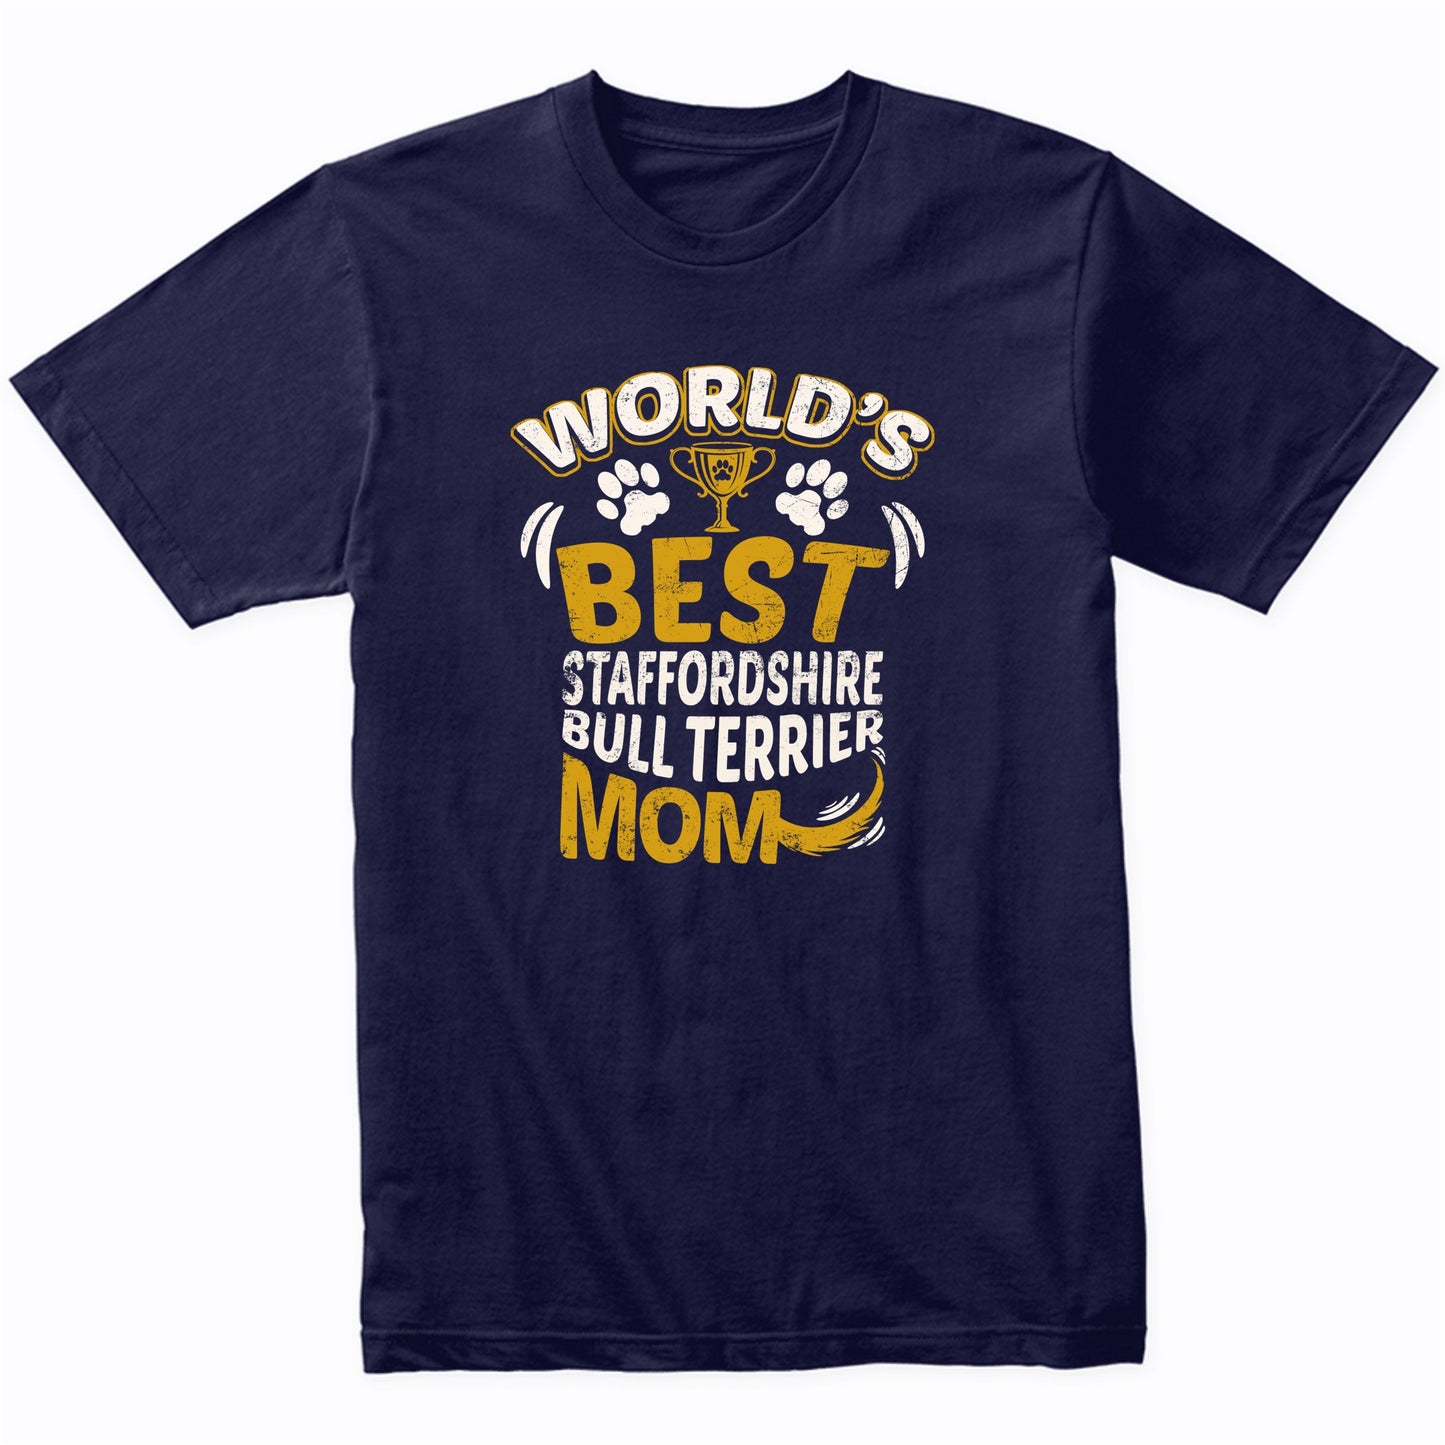 World's Best Staffordshire Bull Terrier Mom Graphic T-Shirt